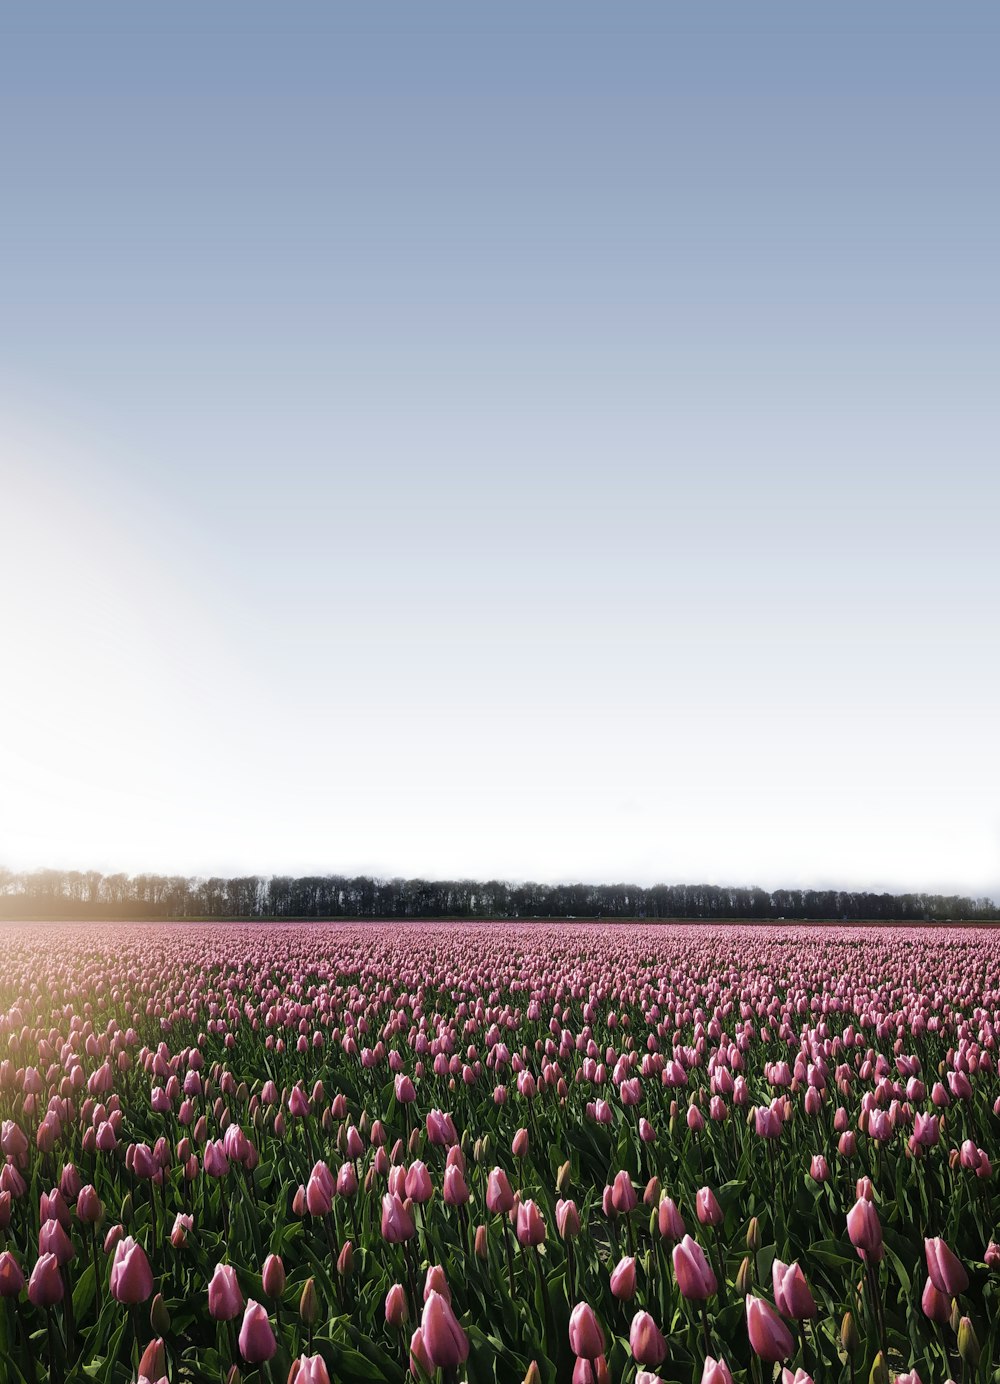 pink flower field under blue sky during daytime